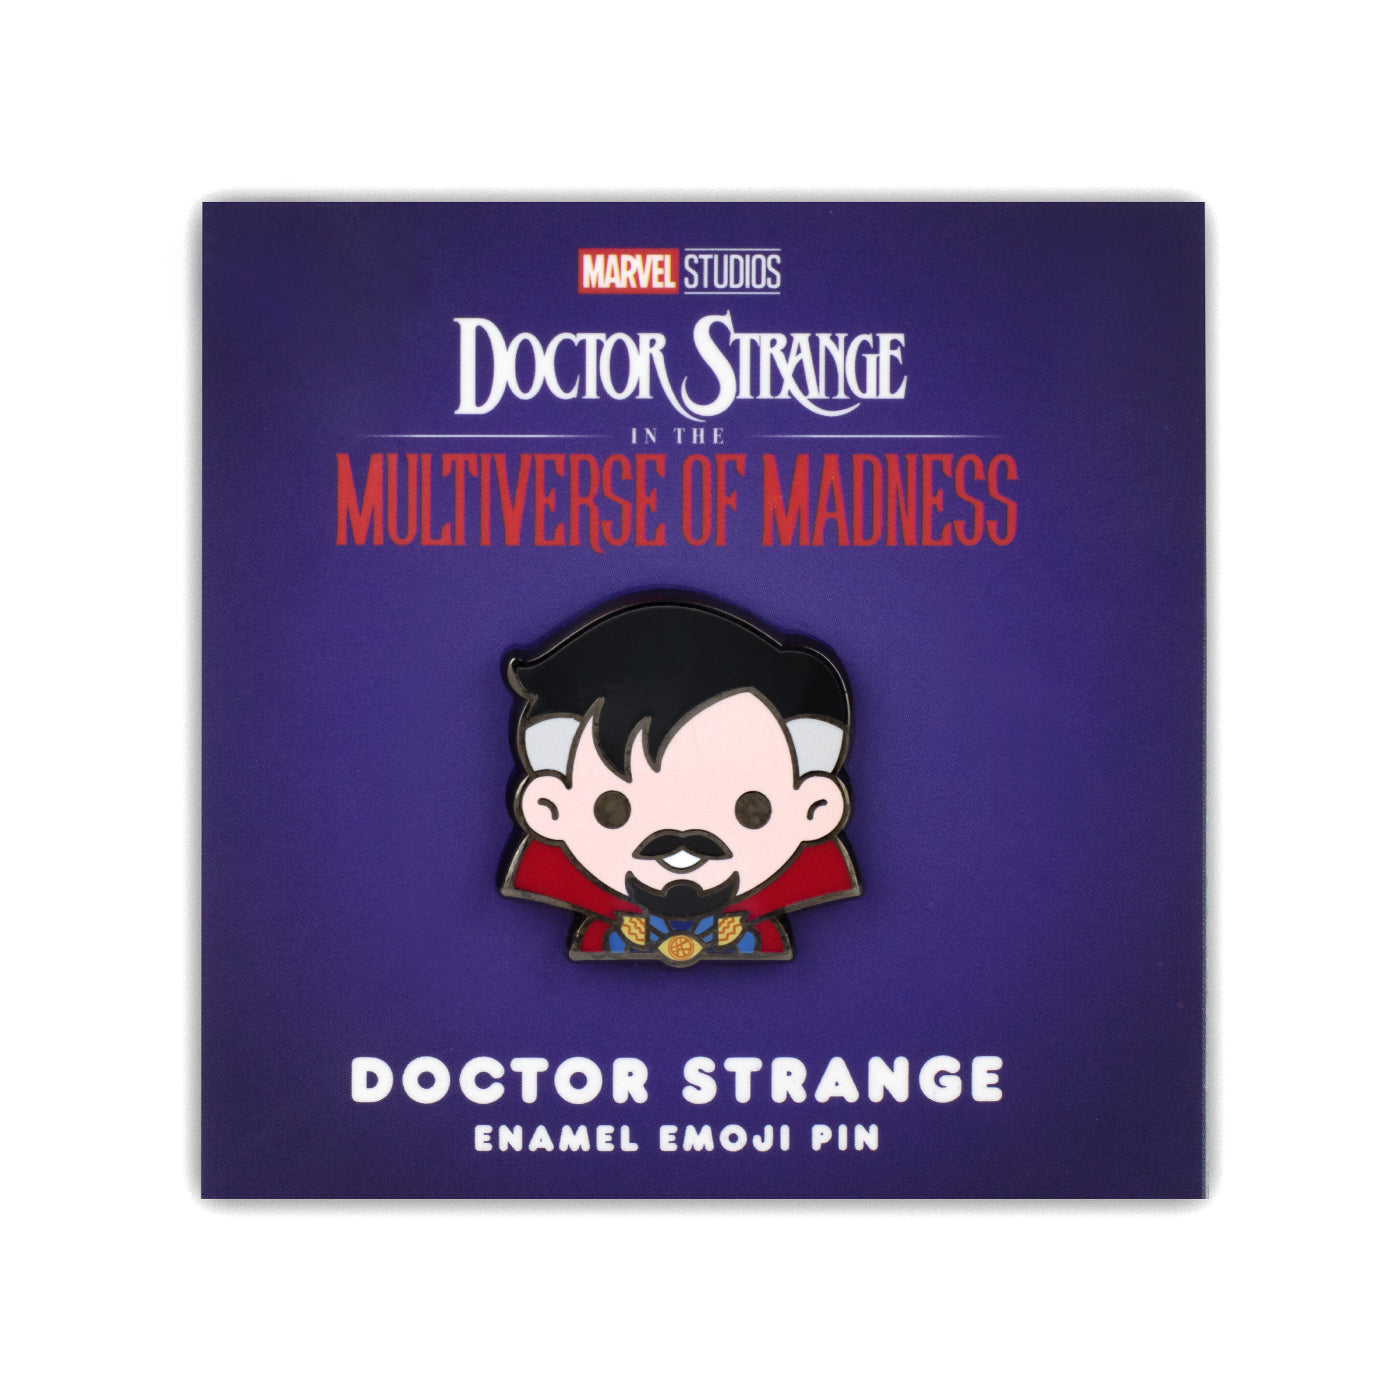 Doctor Strange Enamel Pin pictured on its card backing. 